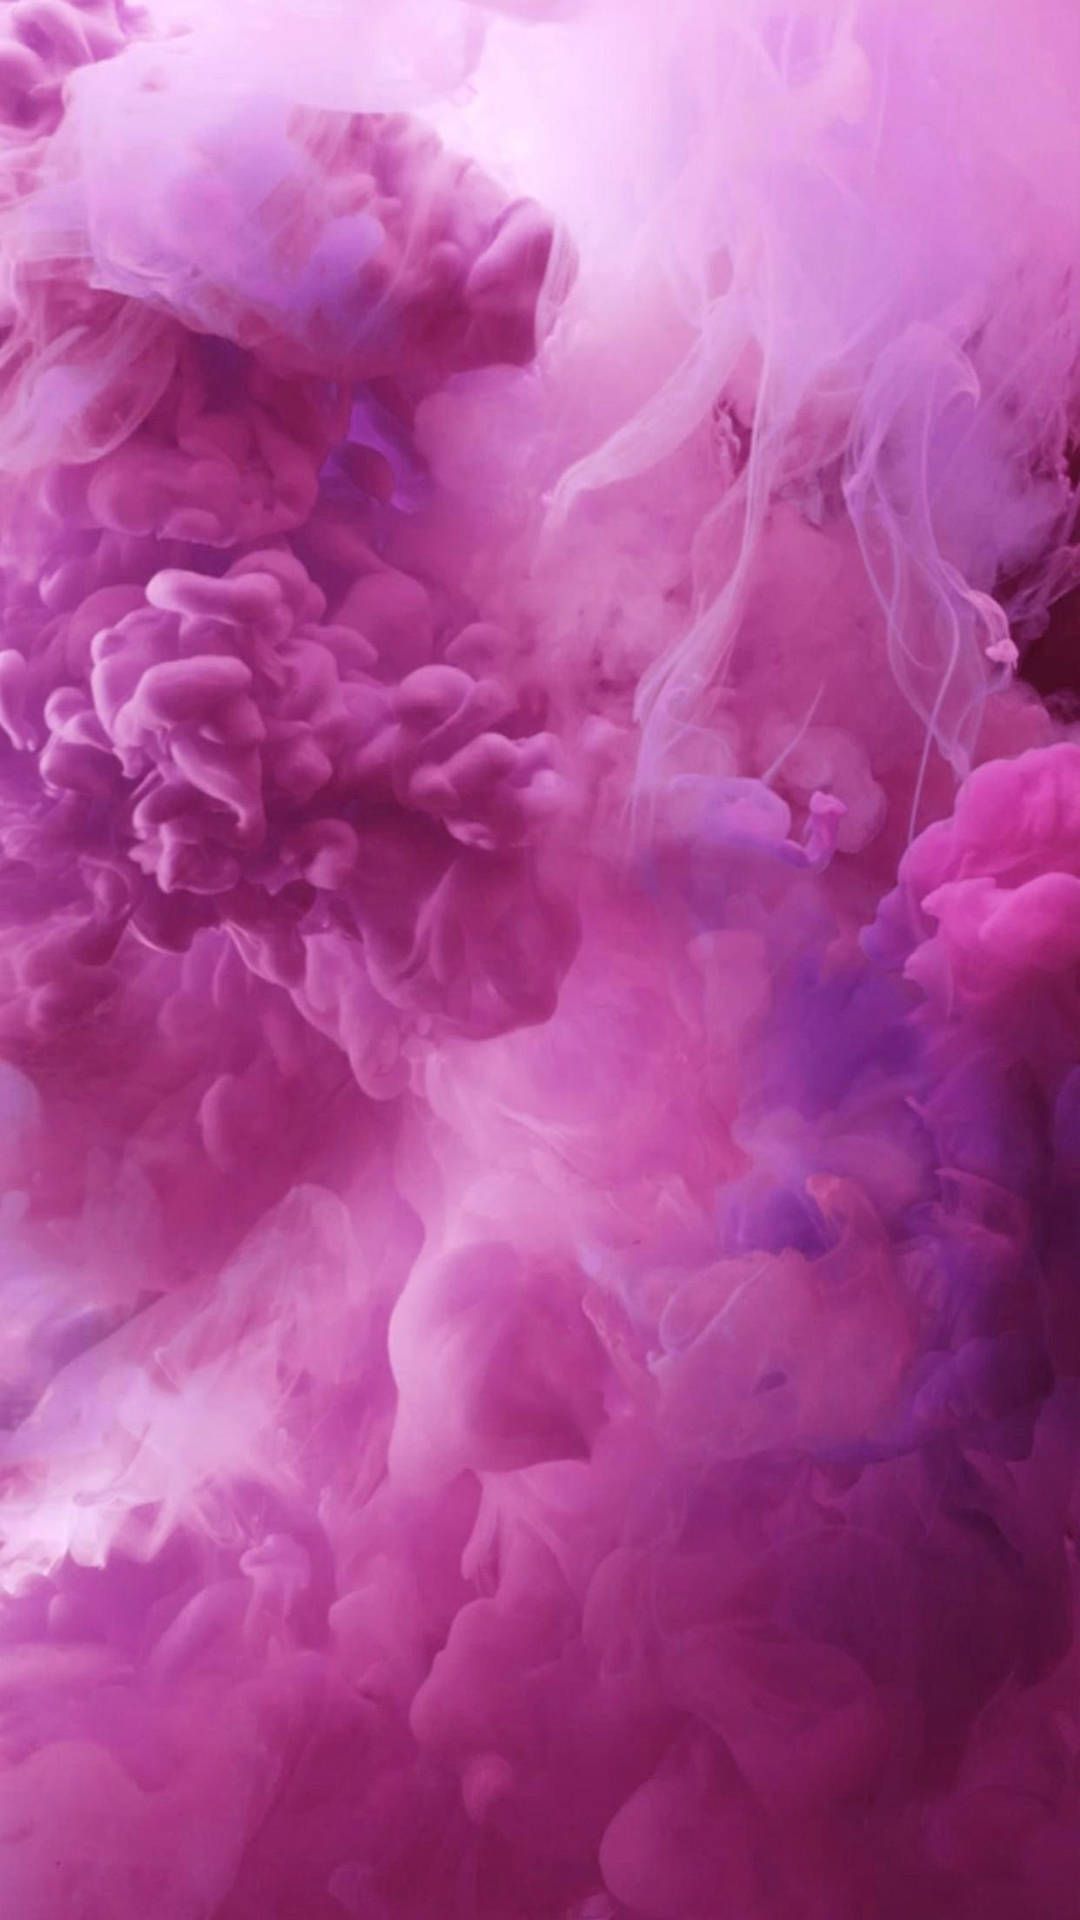 IPhone Pink Aesthetic Smoke Wallpaper